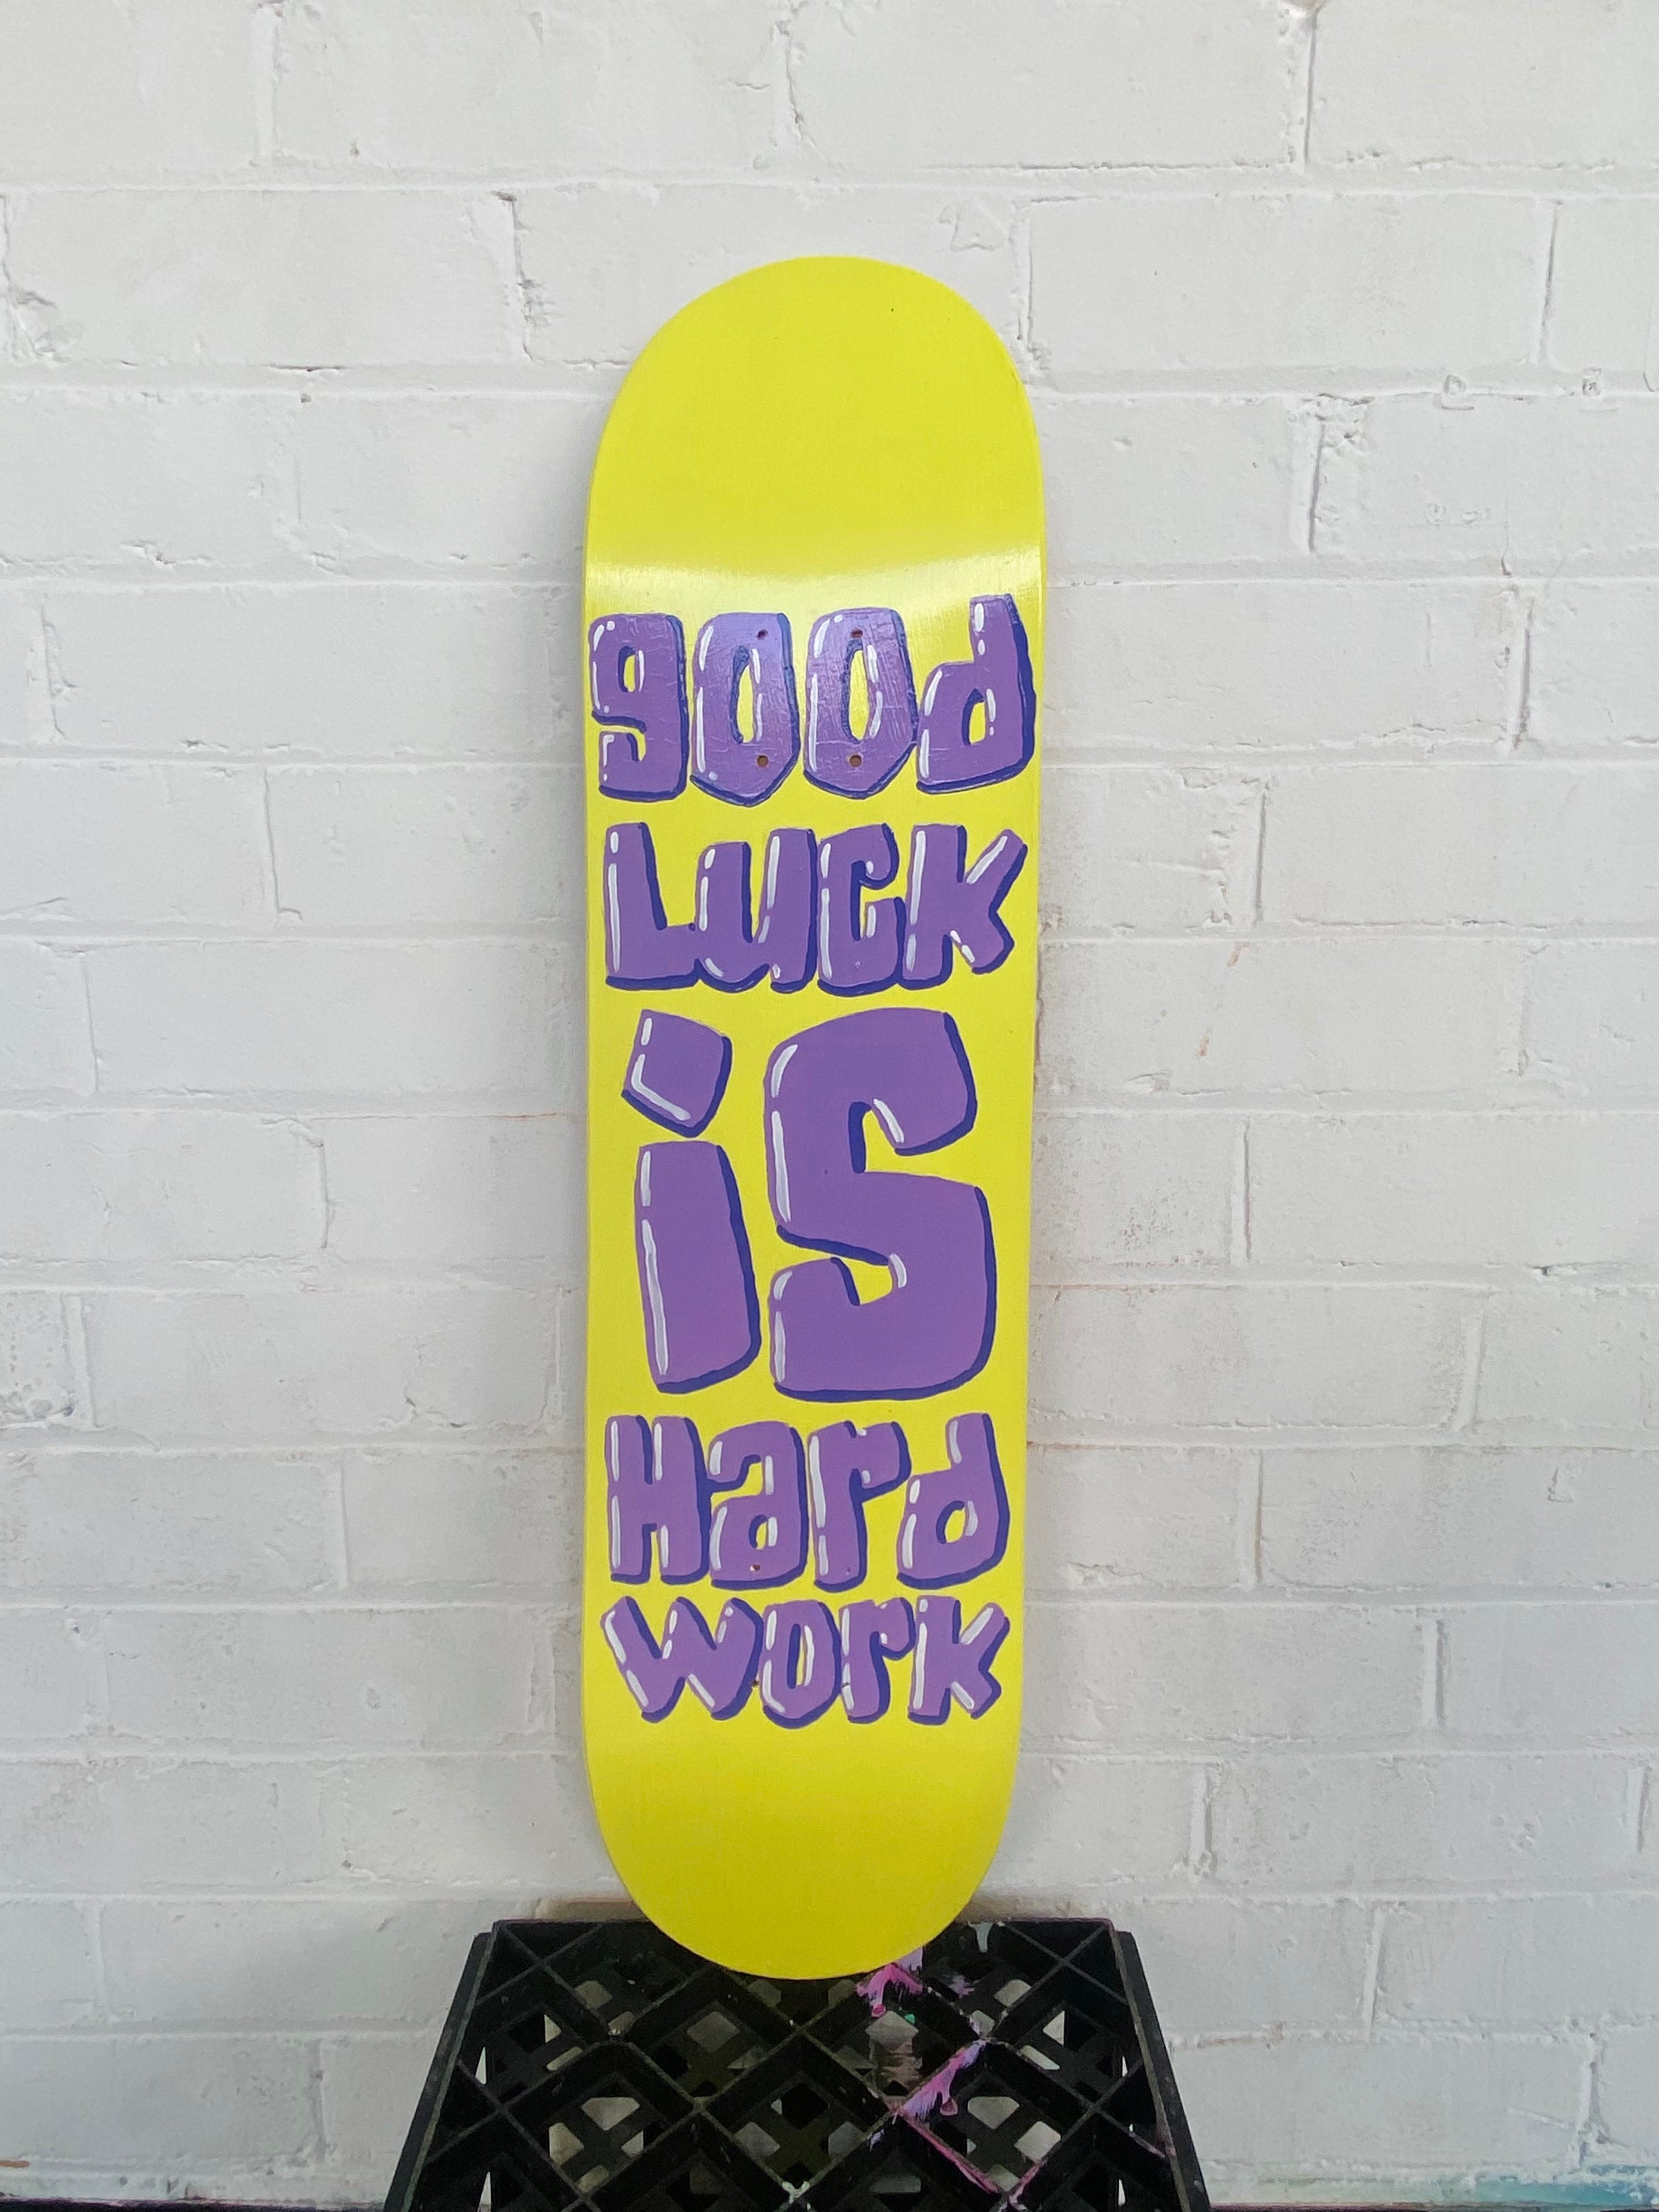 Original: "Good Luck is Hard Work" Skateboard Artwork